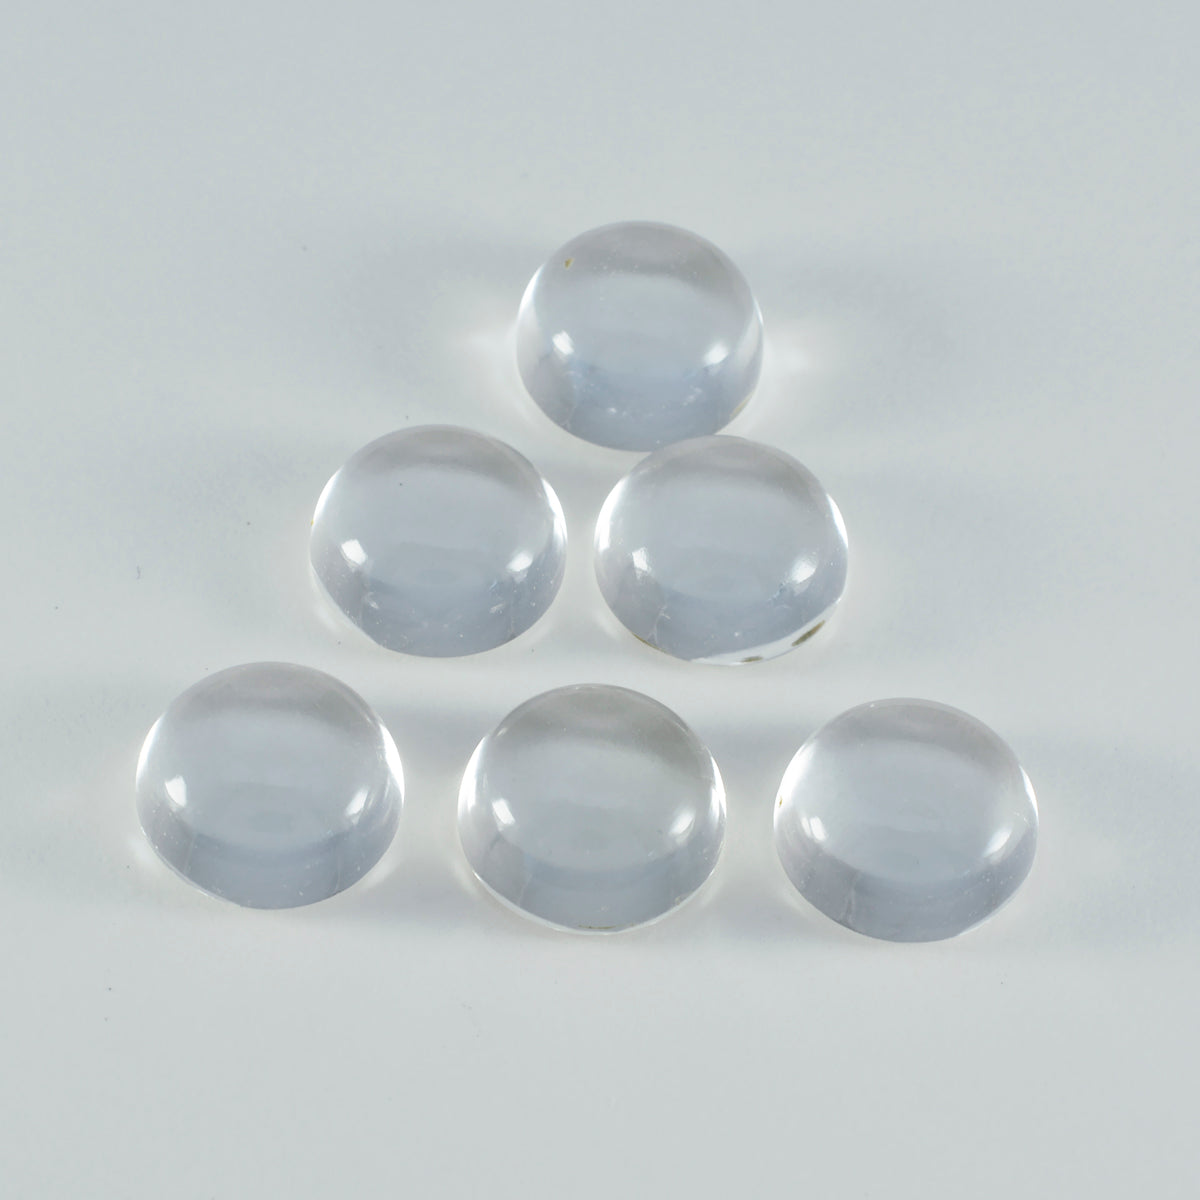 Riyogems 1PC White Crystal Quartz Cabochon 8x8 mm Round Shape A1 Quality Gems